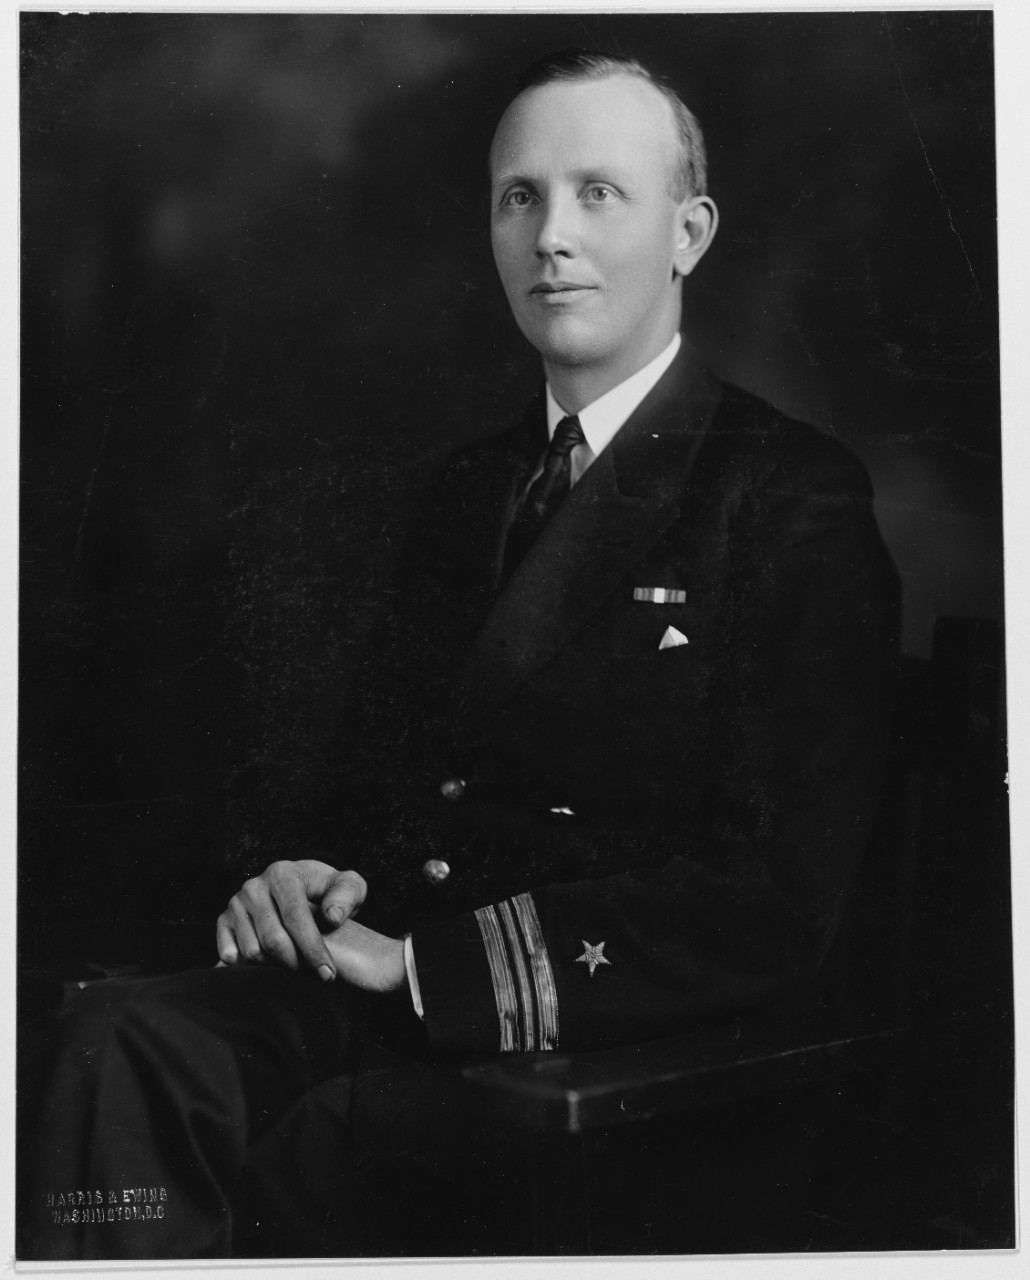 Lieutenant Commander Robert R. M. Emmet, USN